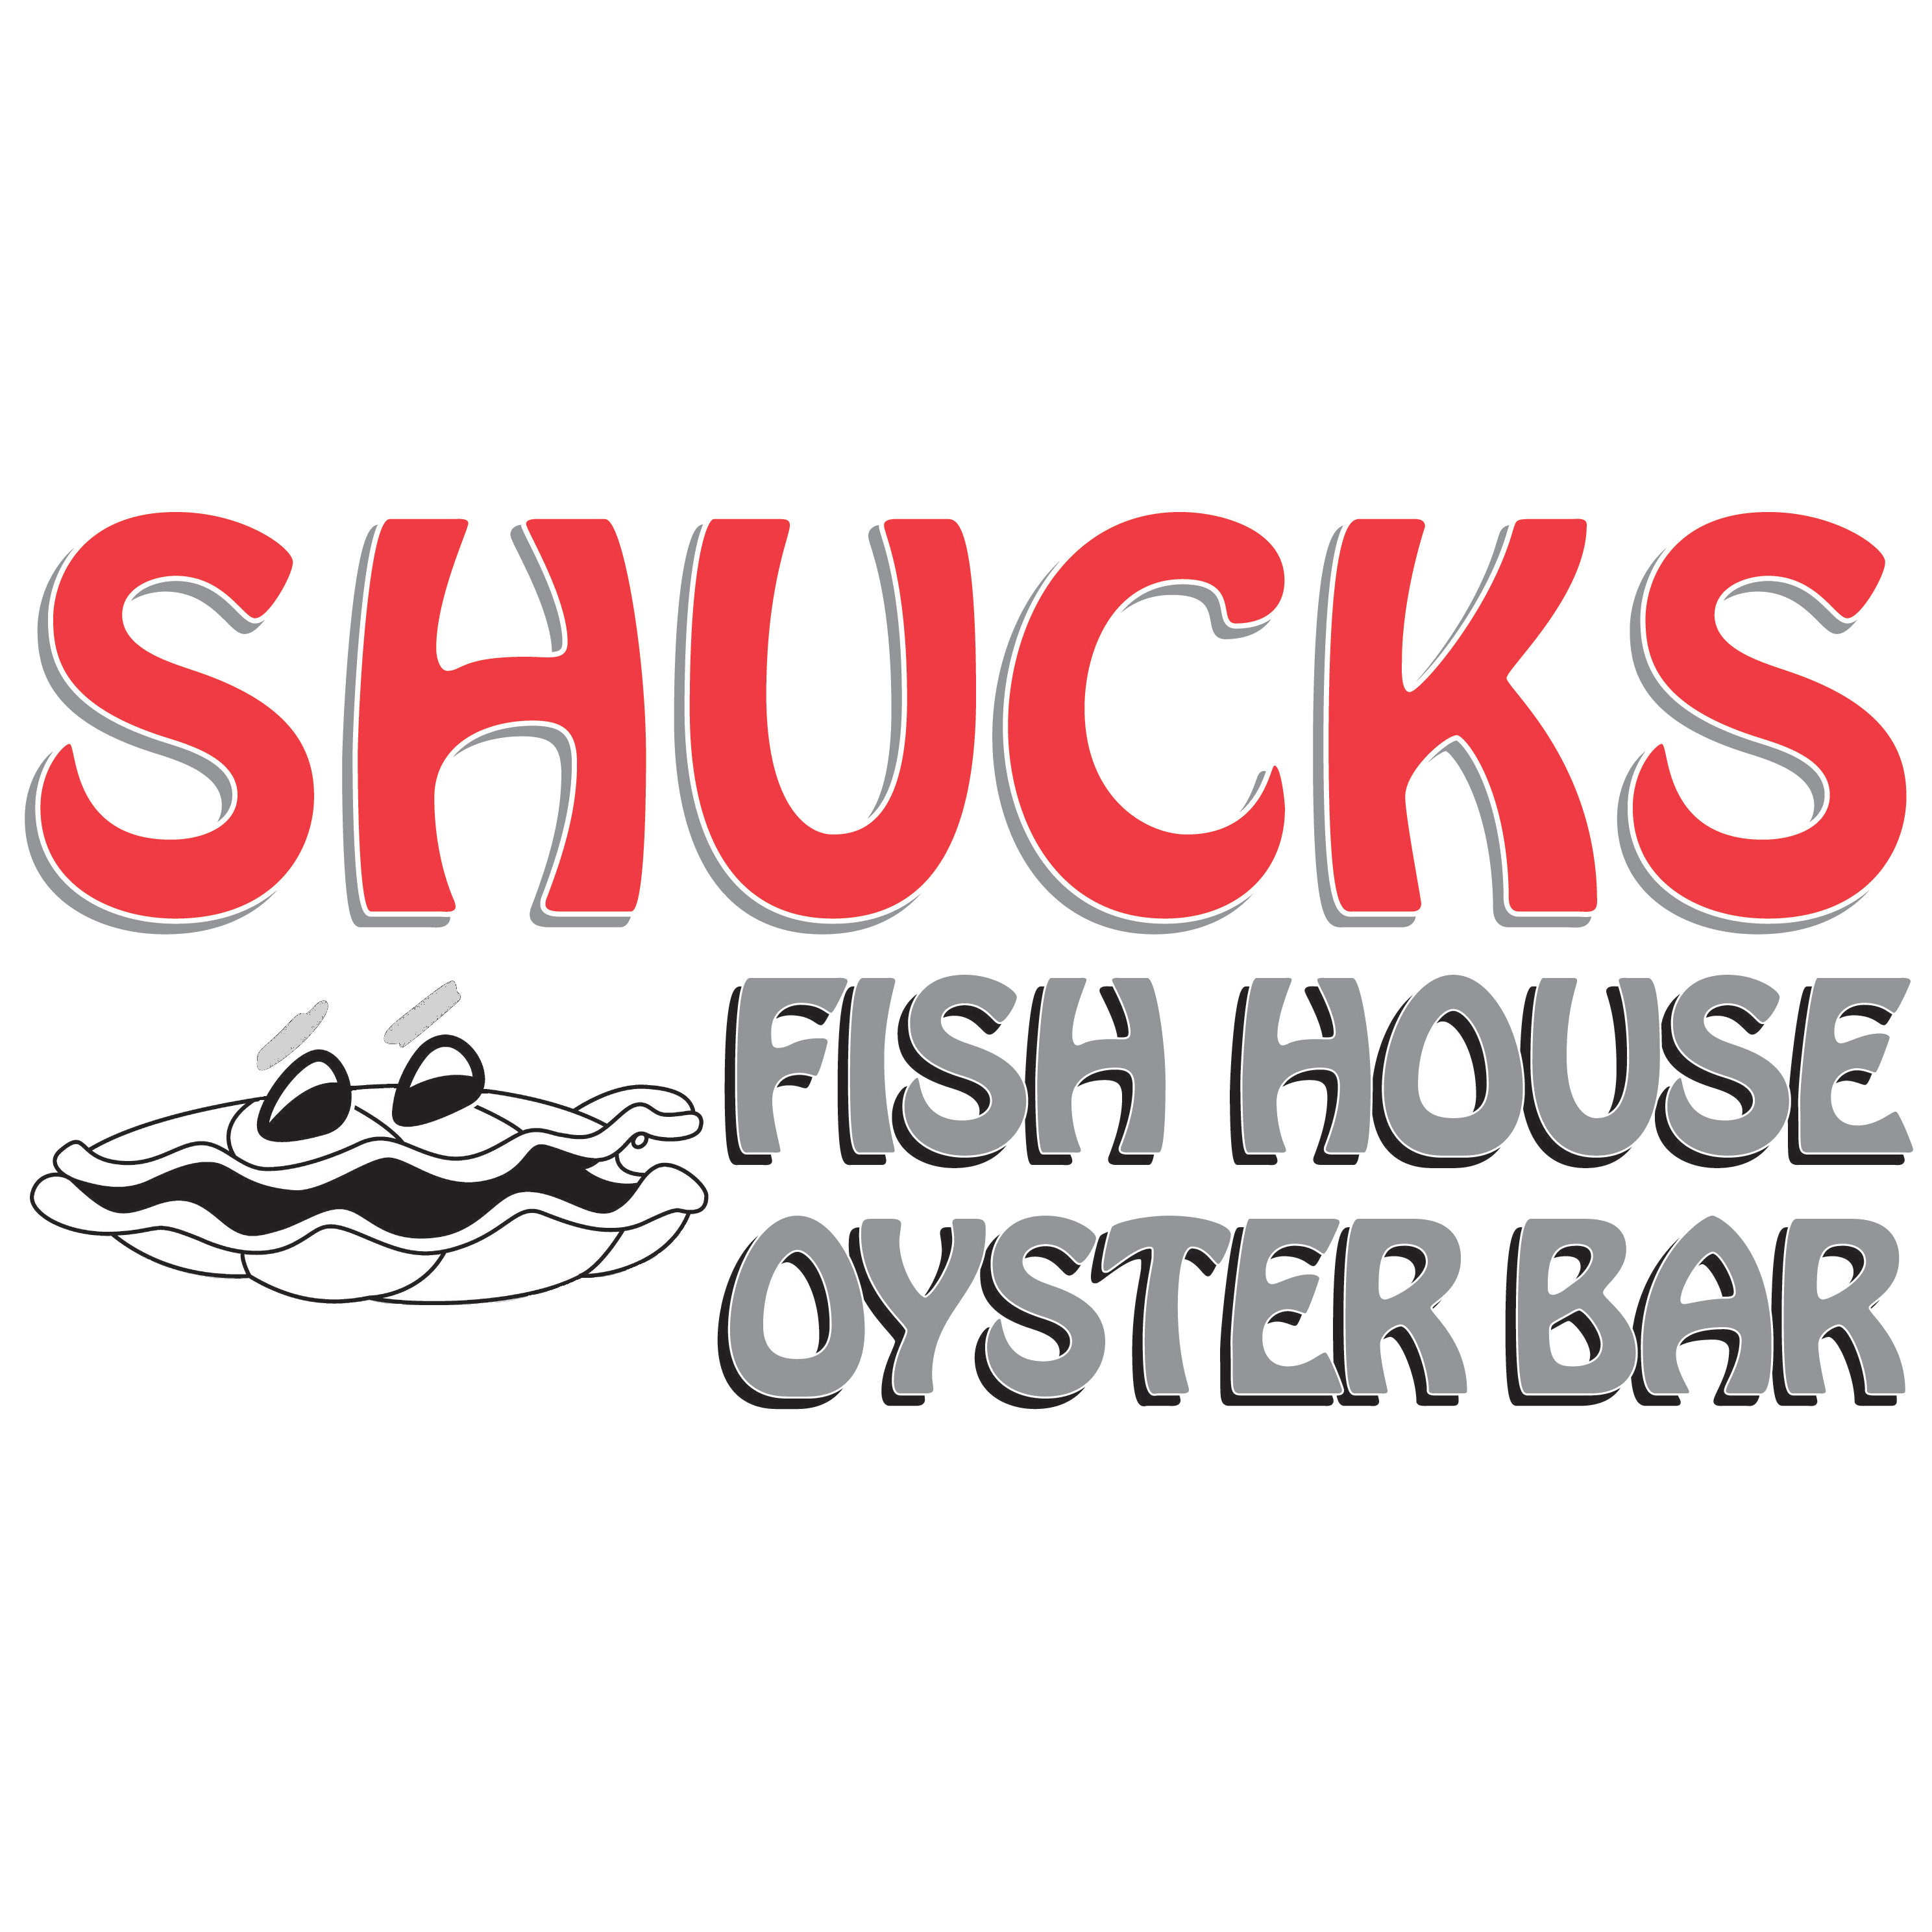 Shucks Fish House & Oyster Bar Omaha (402)763-1860